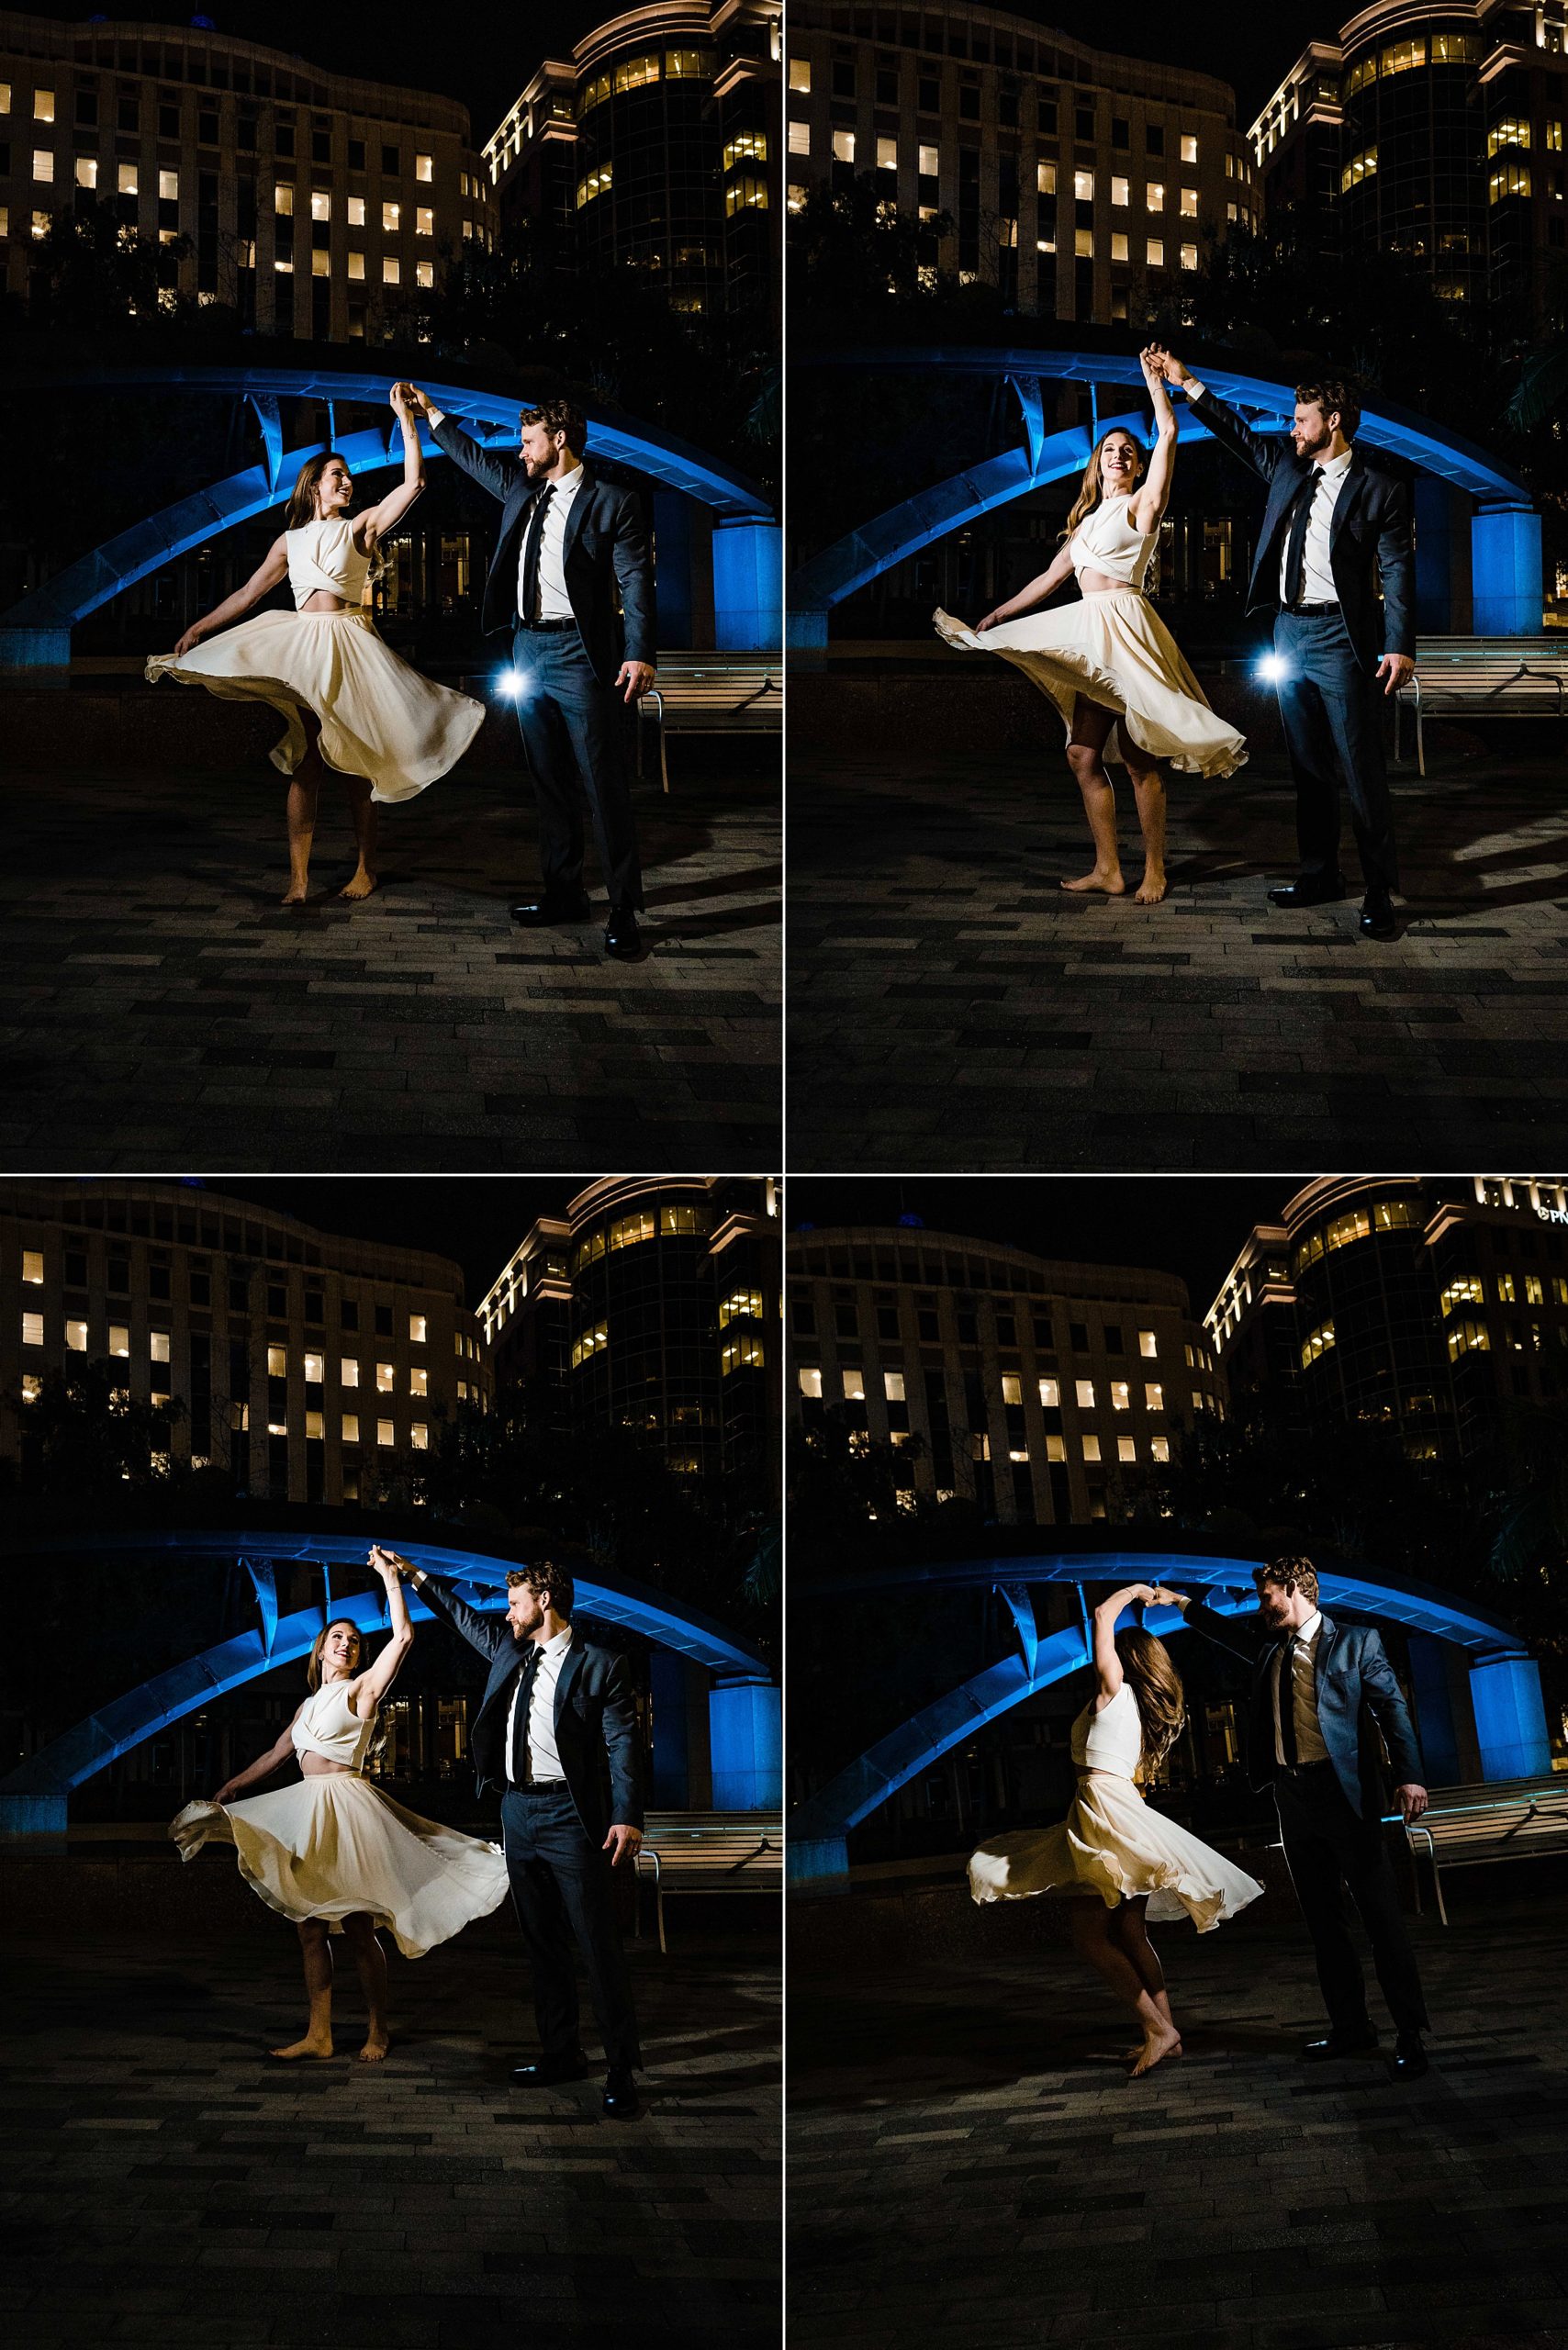 Bride and groom dance in the dark in front of a blue sculpture in Oralndo, FL | kivusandcamera.com